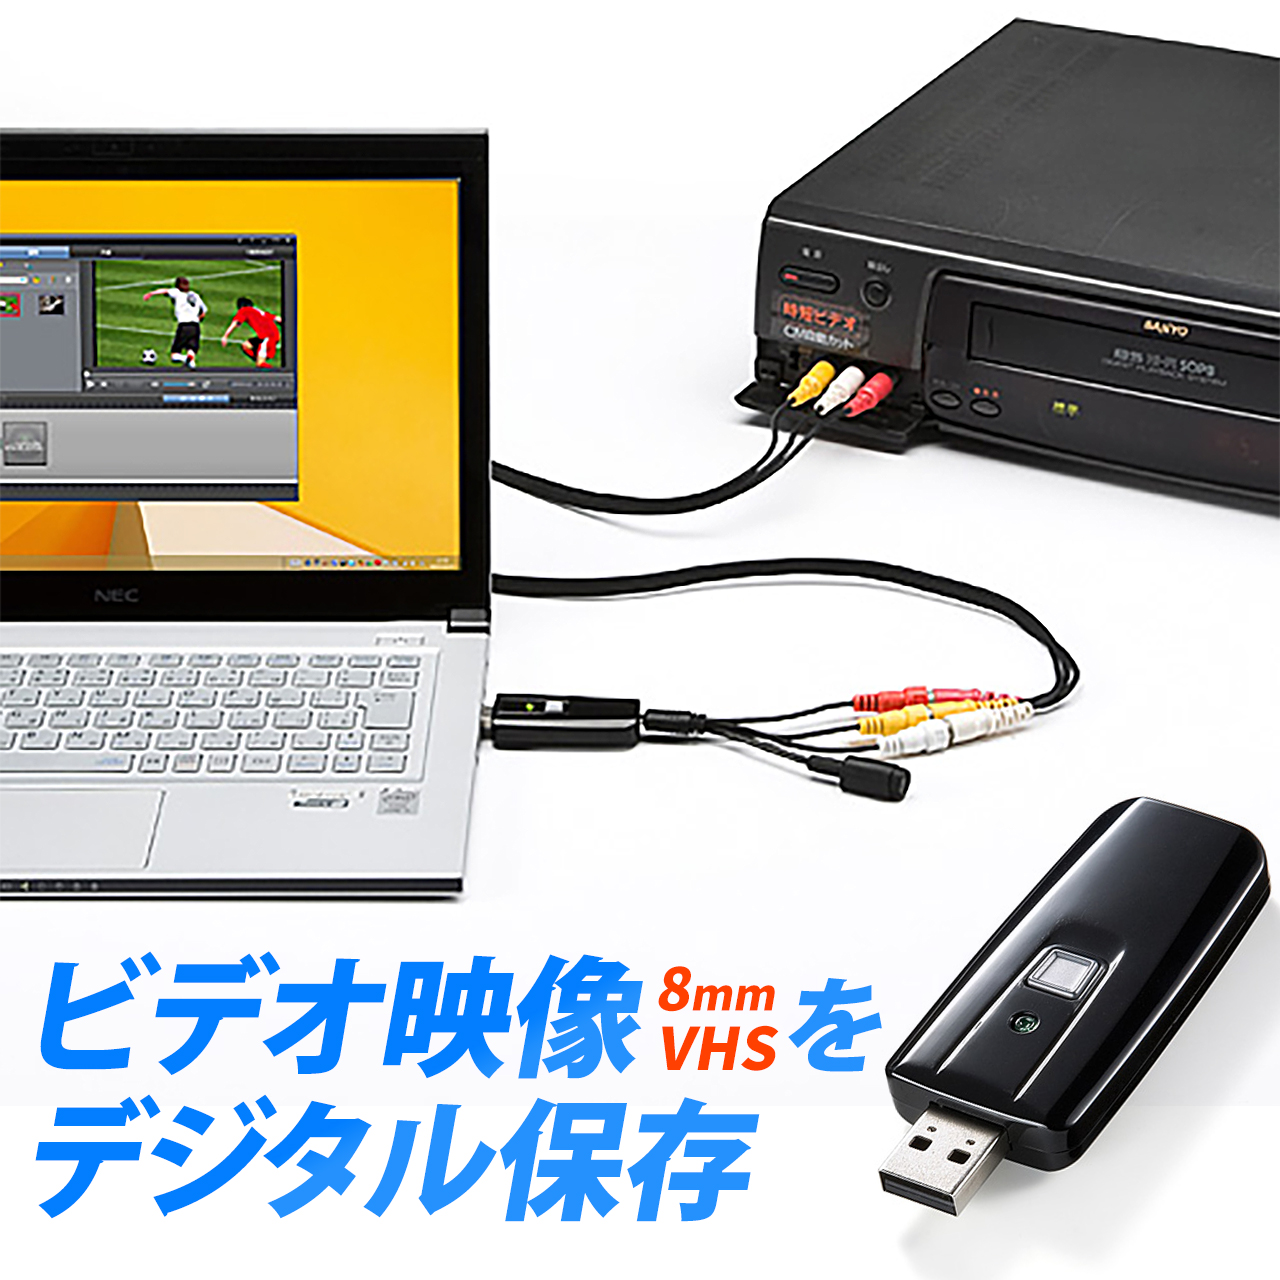 USB2.0ビデオキャプチャー デジタルデータ化 VHS 8mm ビデオテープをPC/DVDに簡単保存Windows 2000 /  XP/Vista/Win 7/8/8.1/10対応 video capture - メルカリ